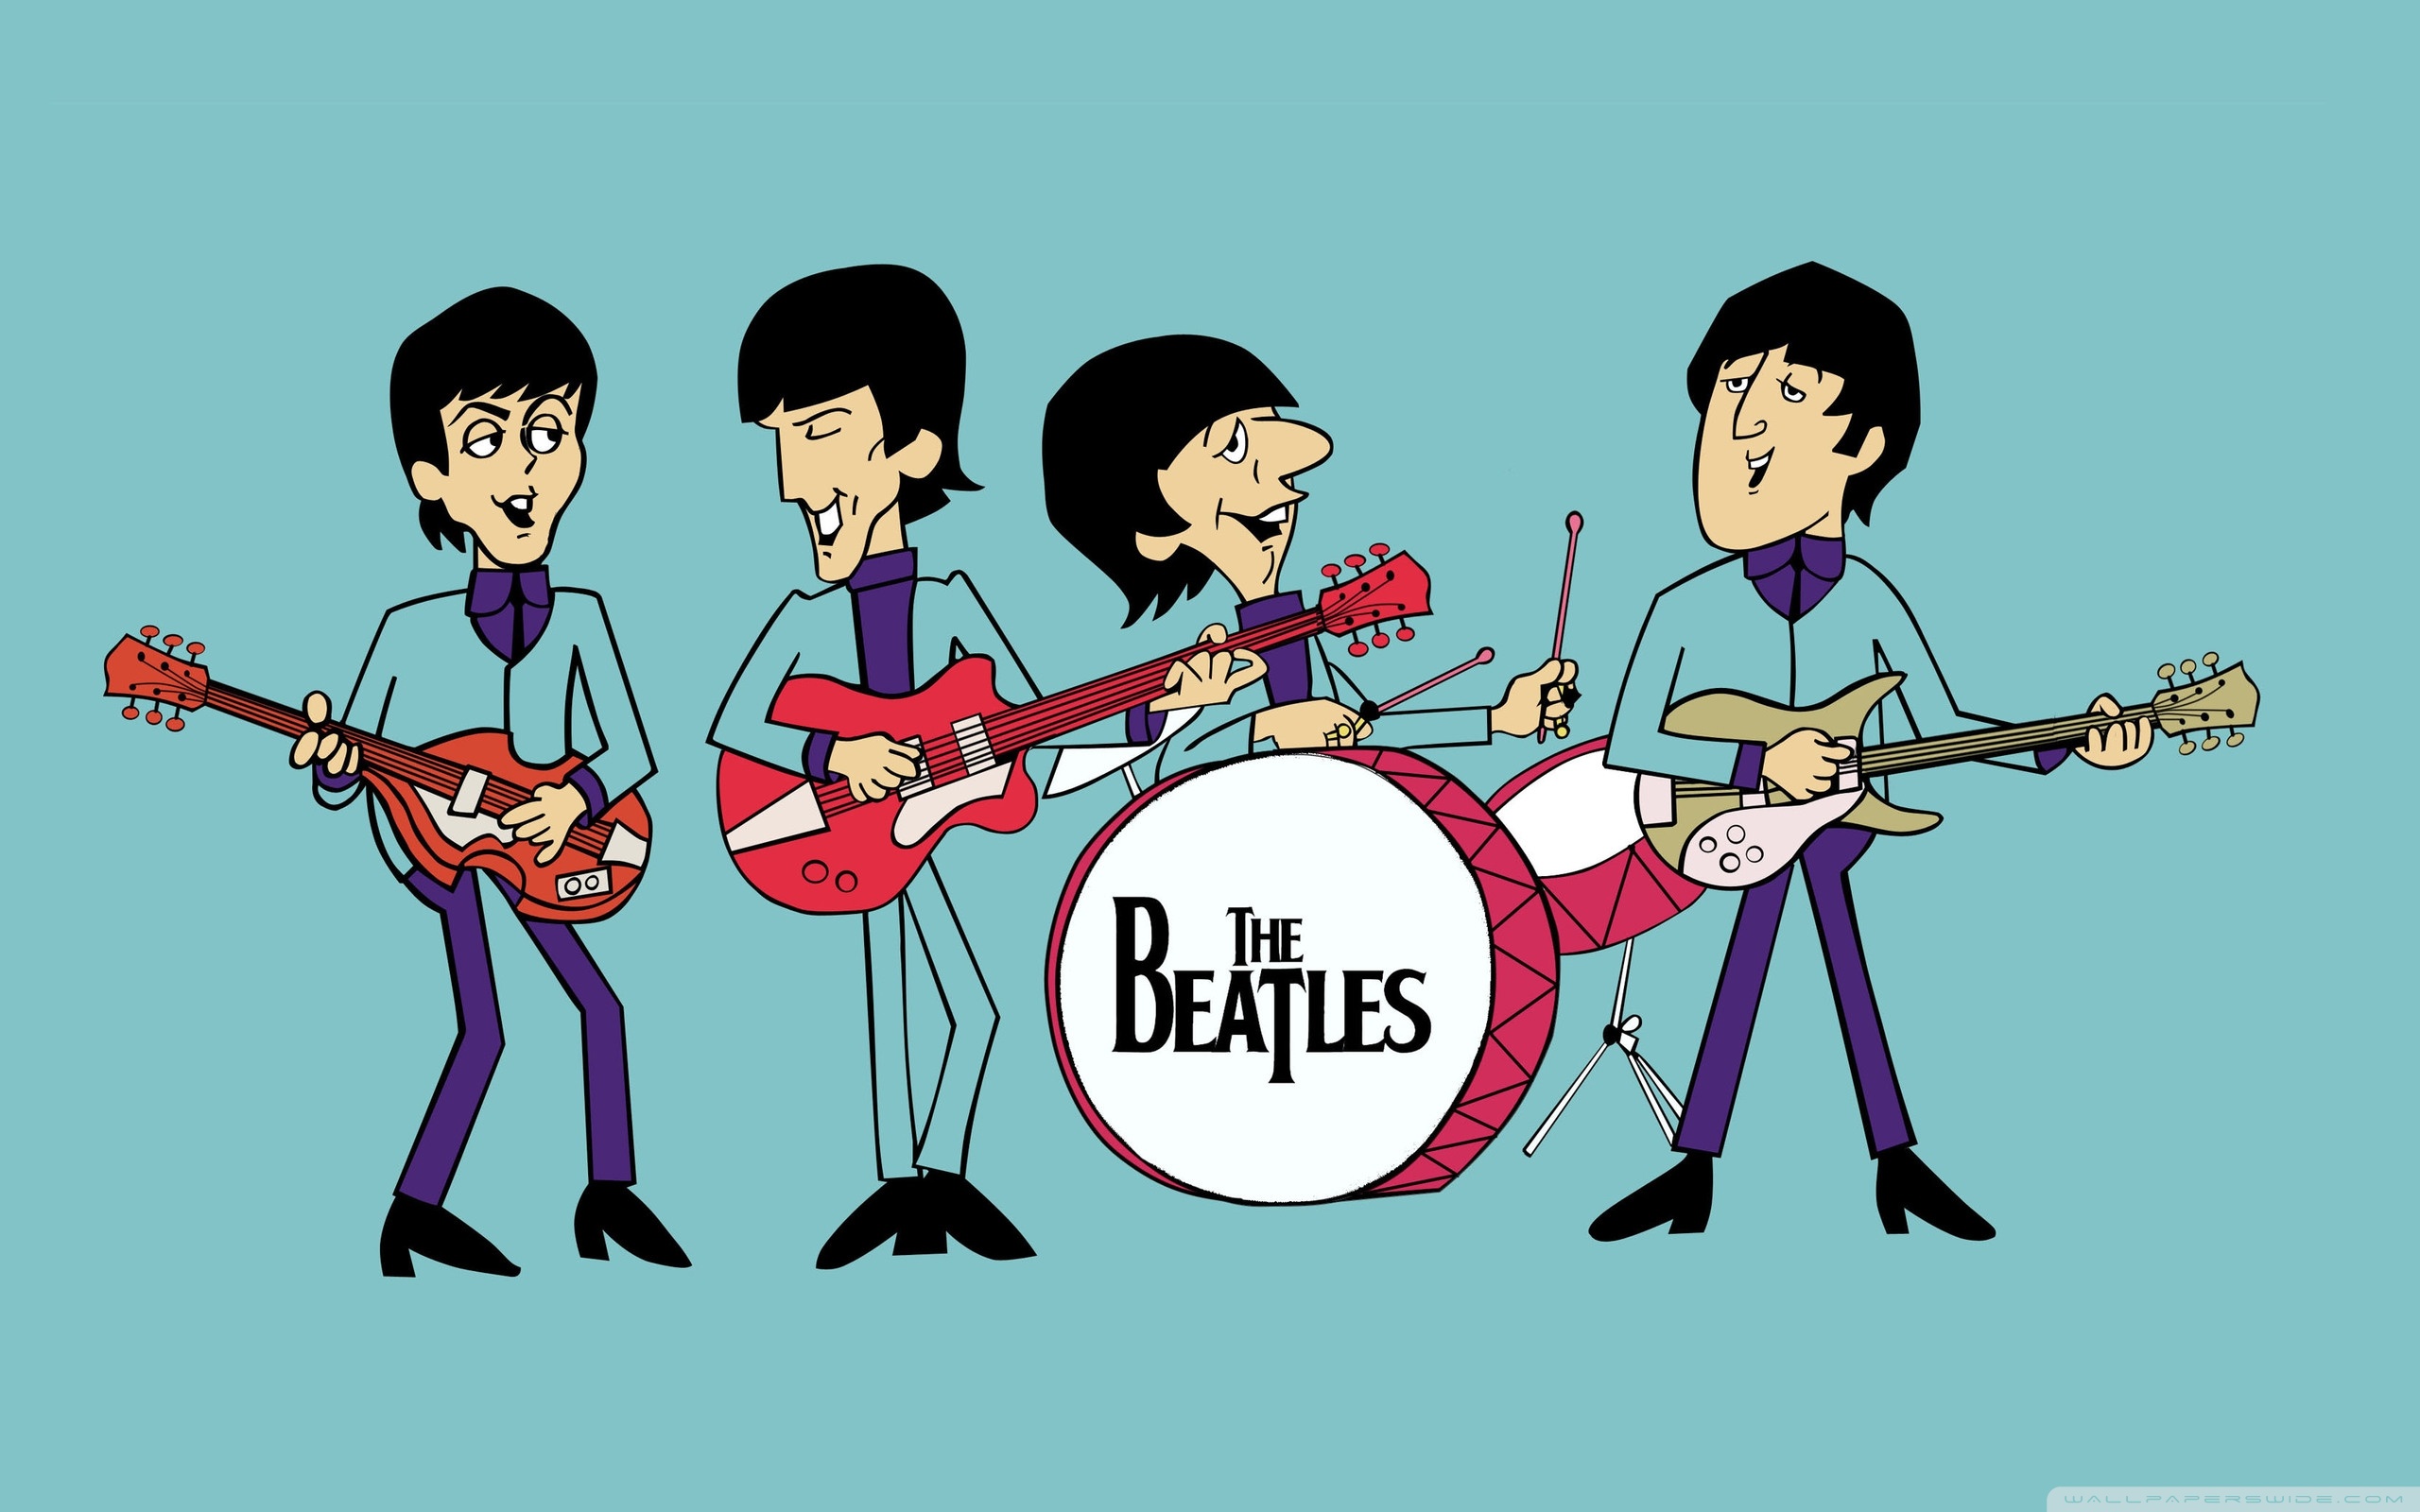 The Beatles Cartoon Ultra Hd Desktop Background Wallpaper For 4k Uhd Tv Tablet Smartphone